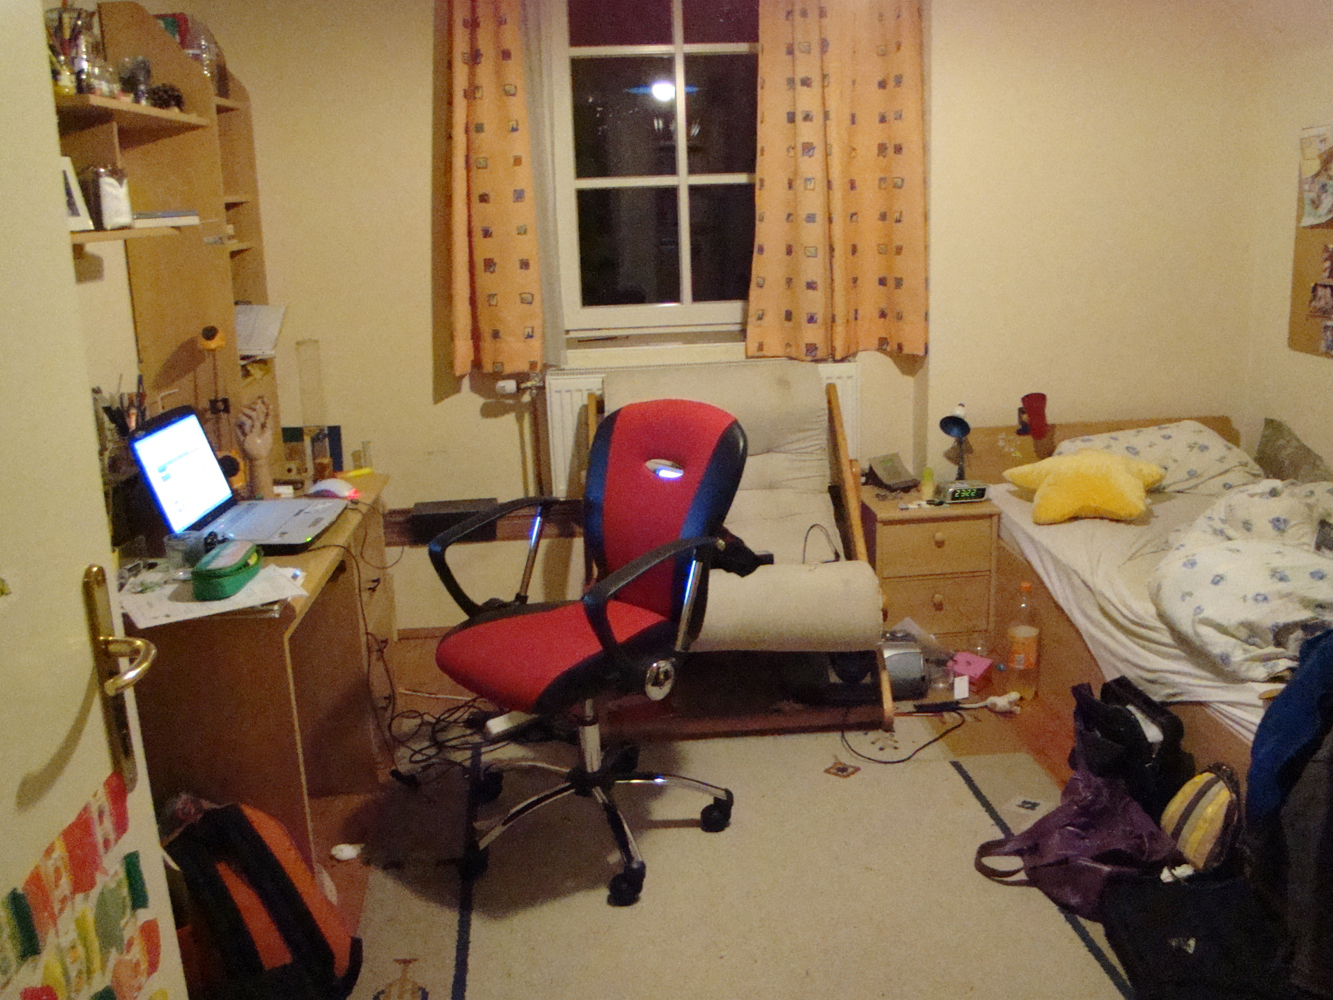 my messy room lol - House MD Fans Photo (5071472) - Fanpop
